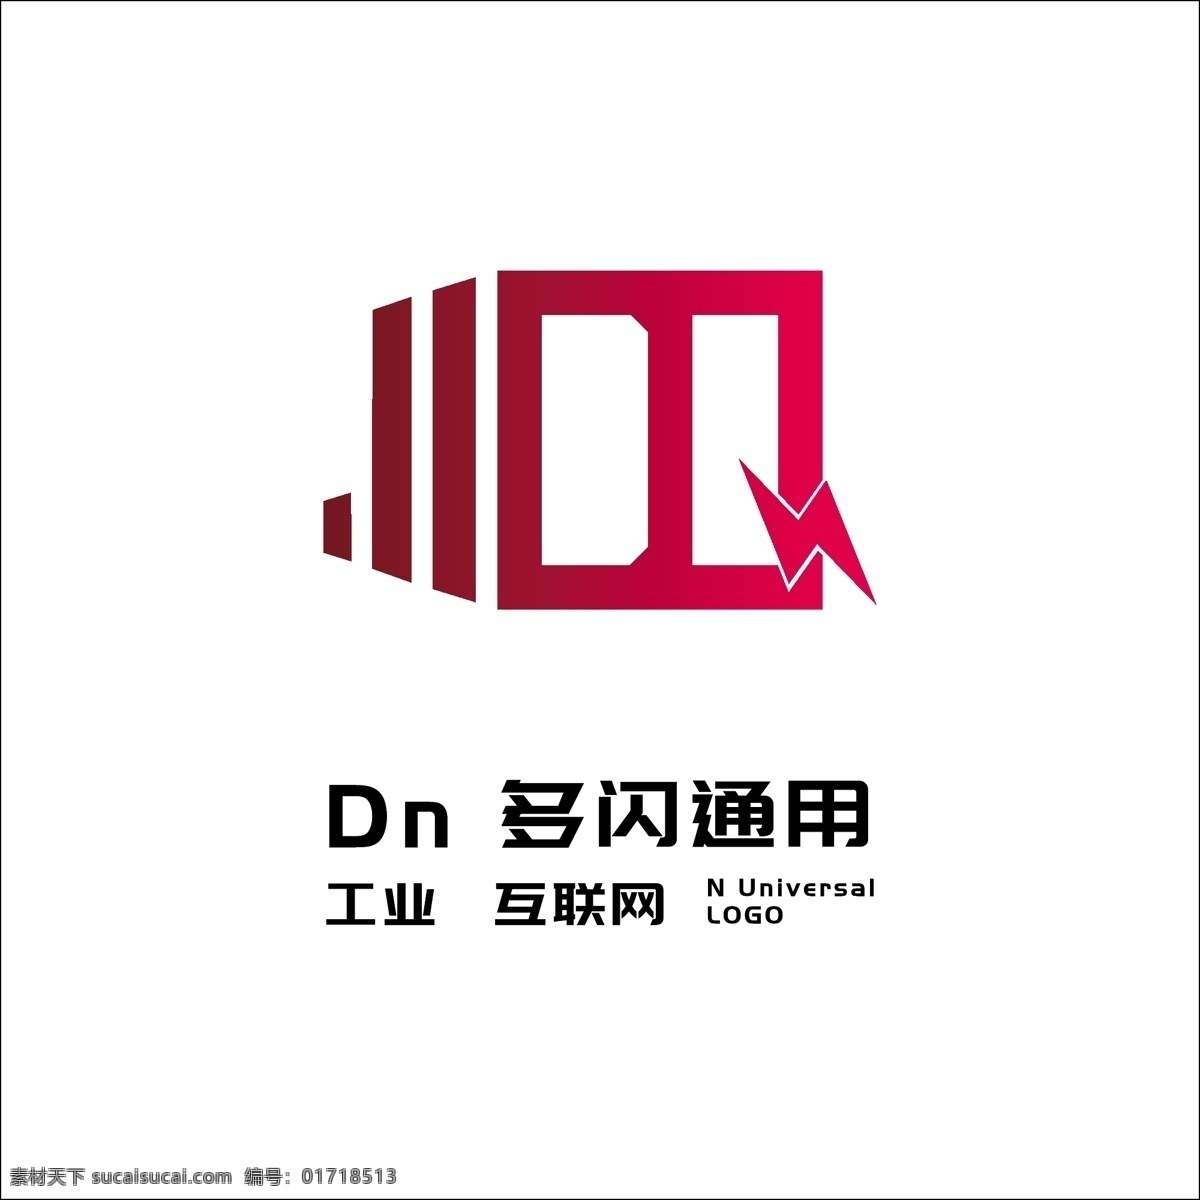 dn 电工 闪电 游戏类 工业 企业 通用 logo 字母d 工业logo 企业logo 互联网 电气logo 游戏logo 闪电logo